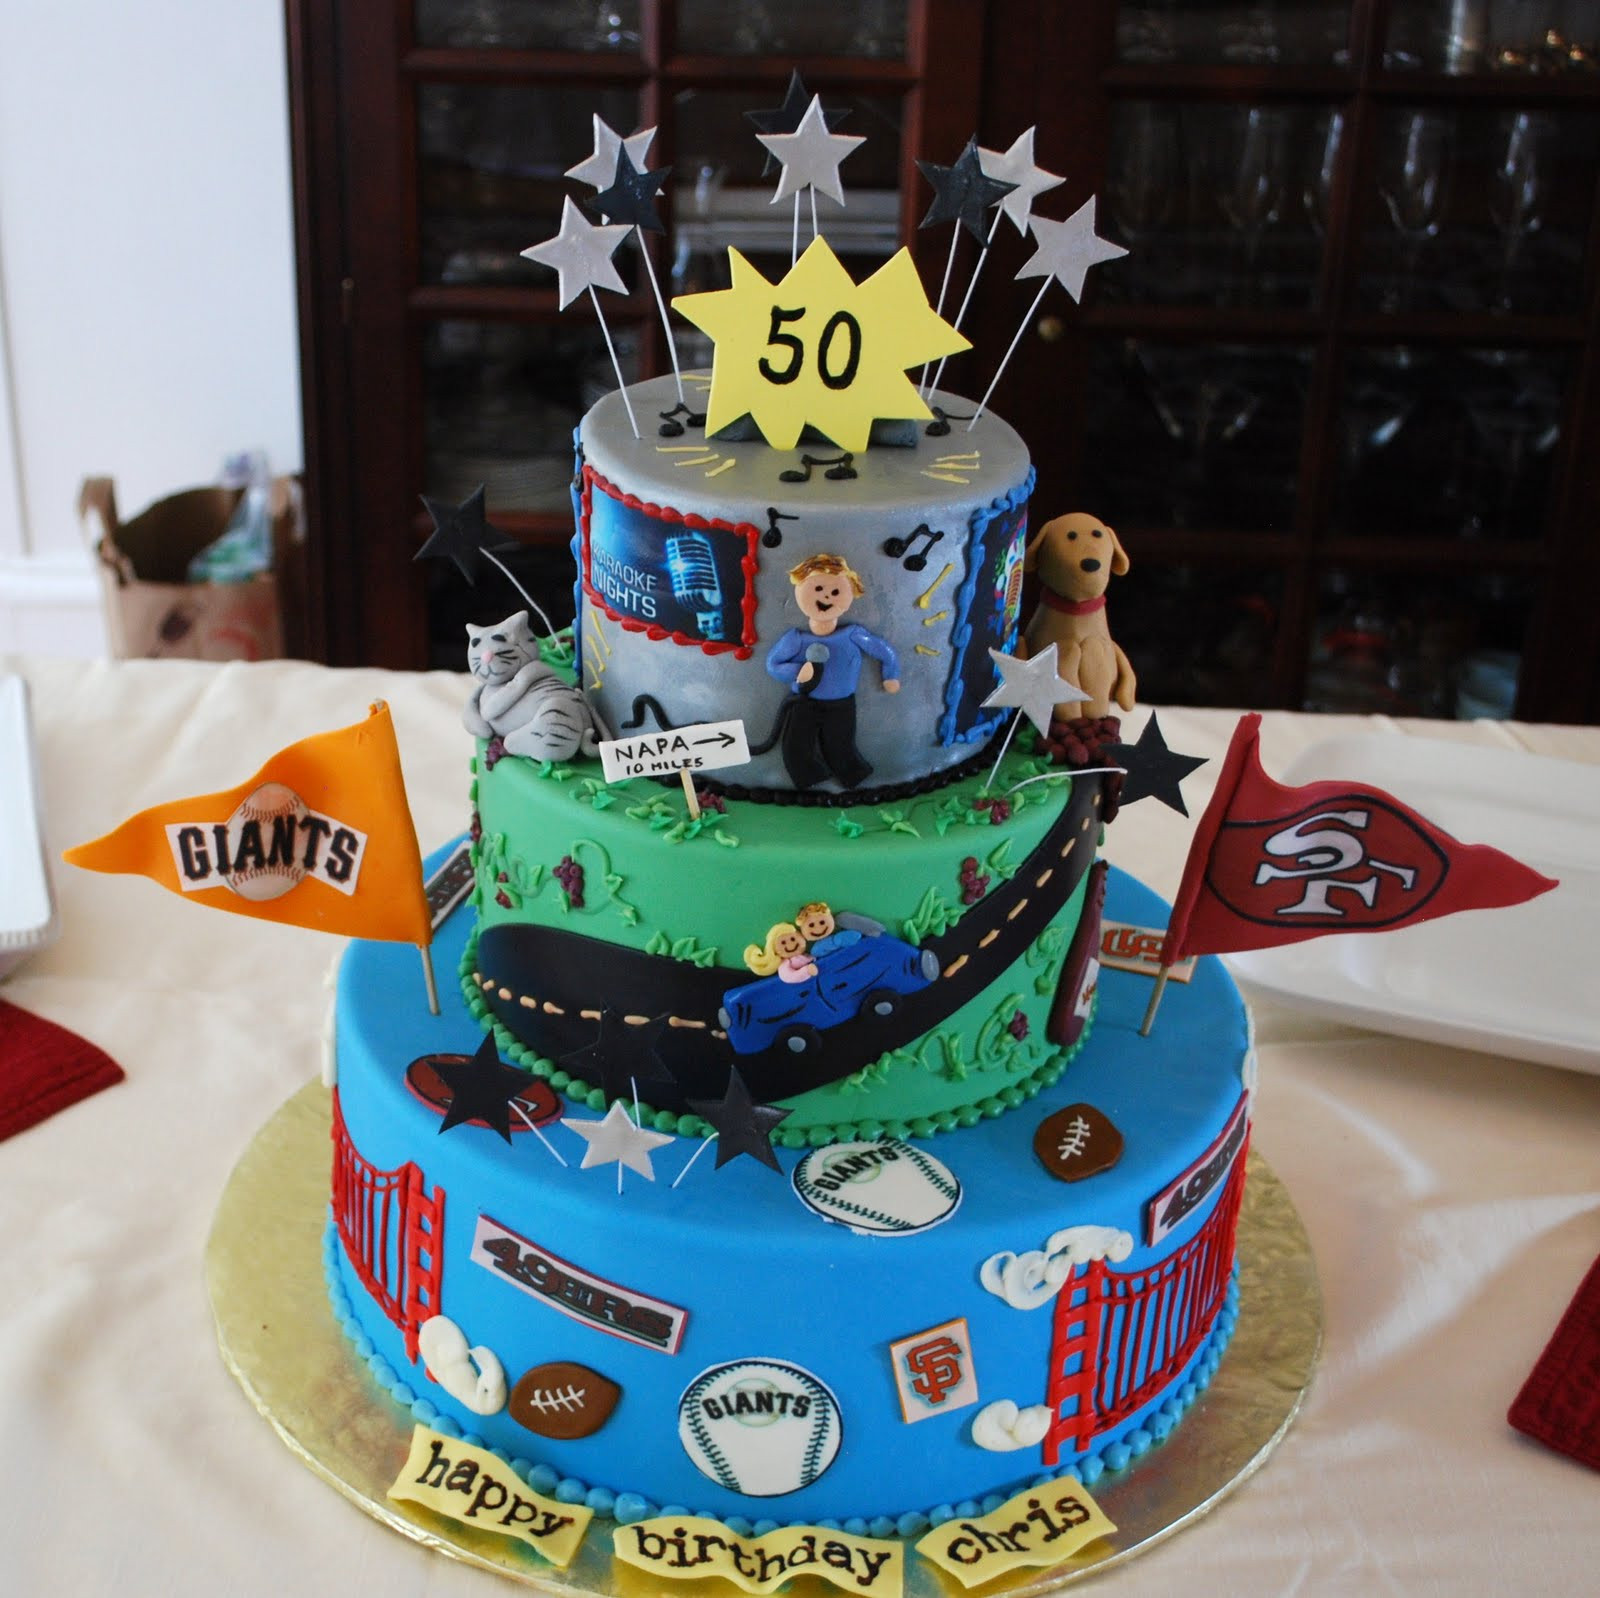 Funny 50th Birthday Cake Ideas
 The Beehive 50th Birthday Cake